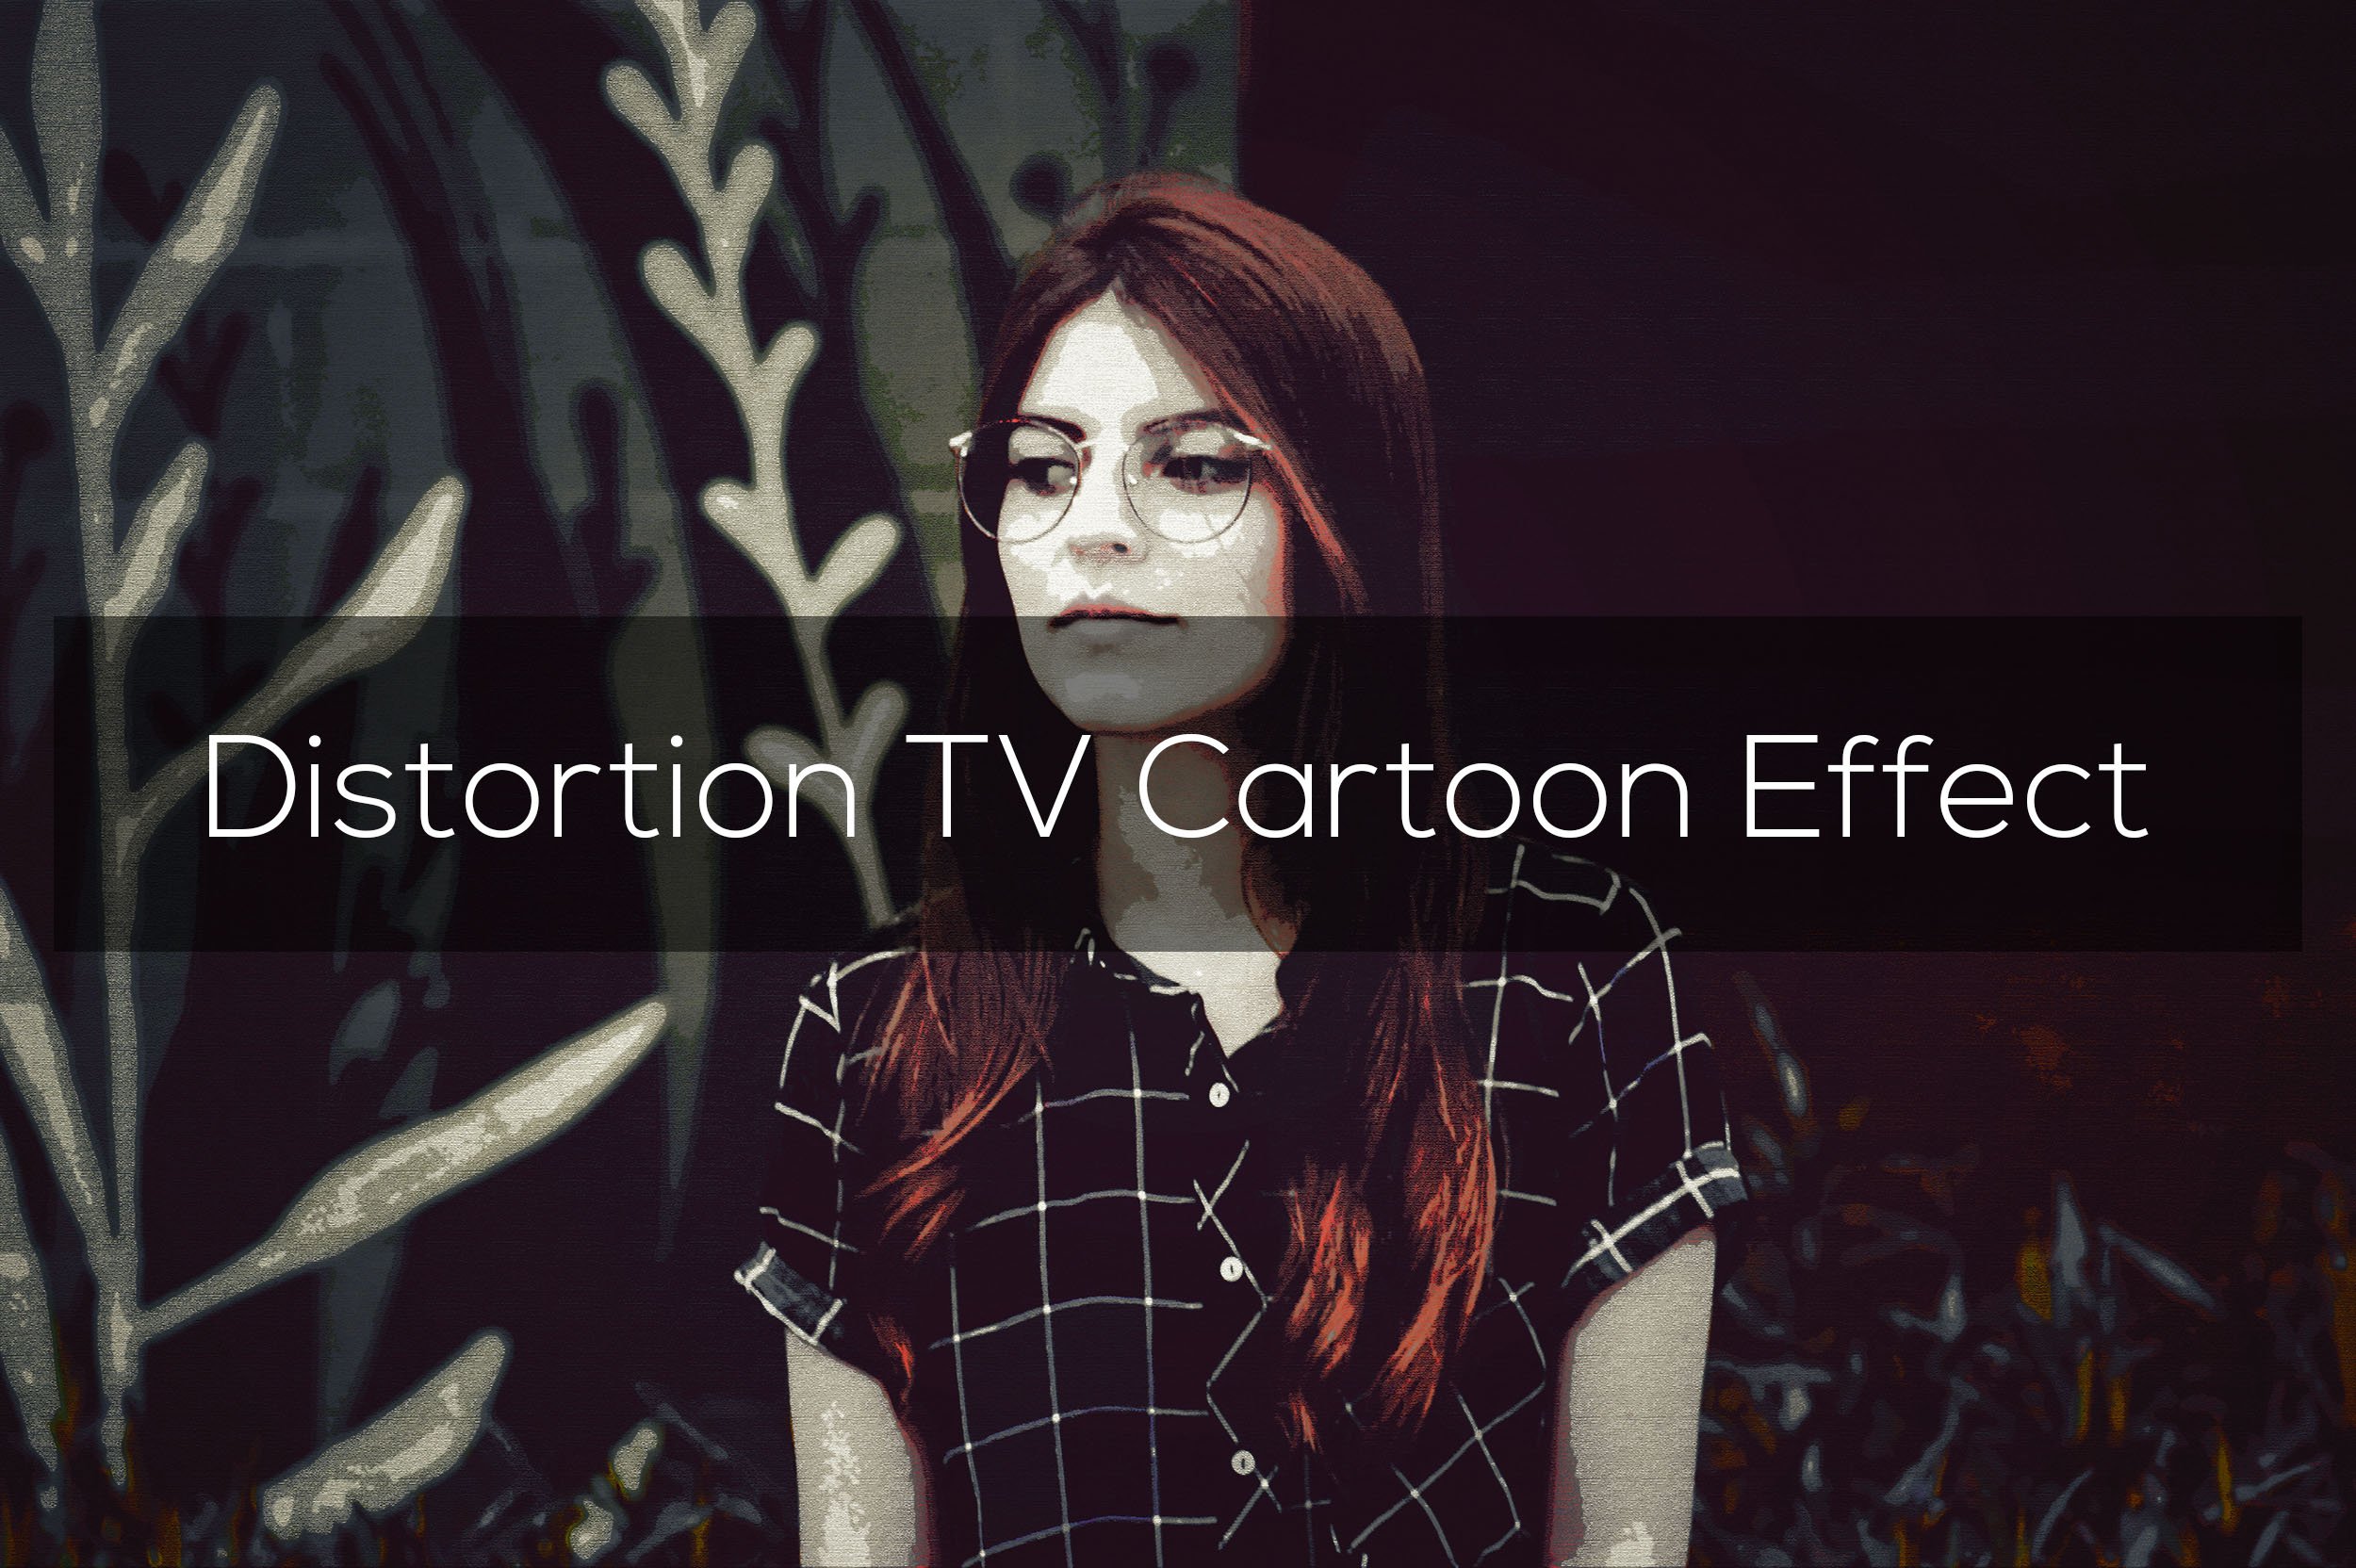 Distortion TV Cartoon Effectcover image.